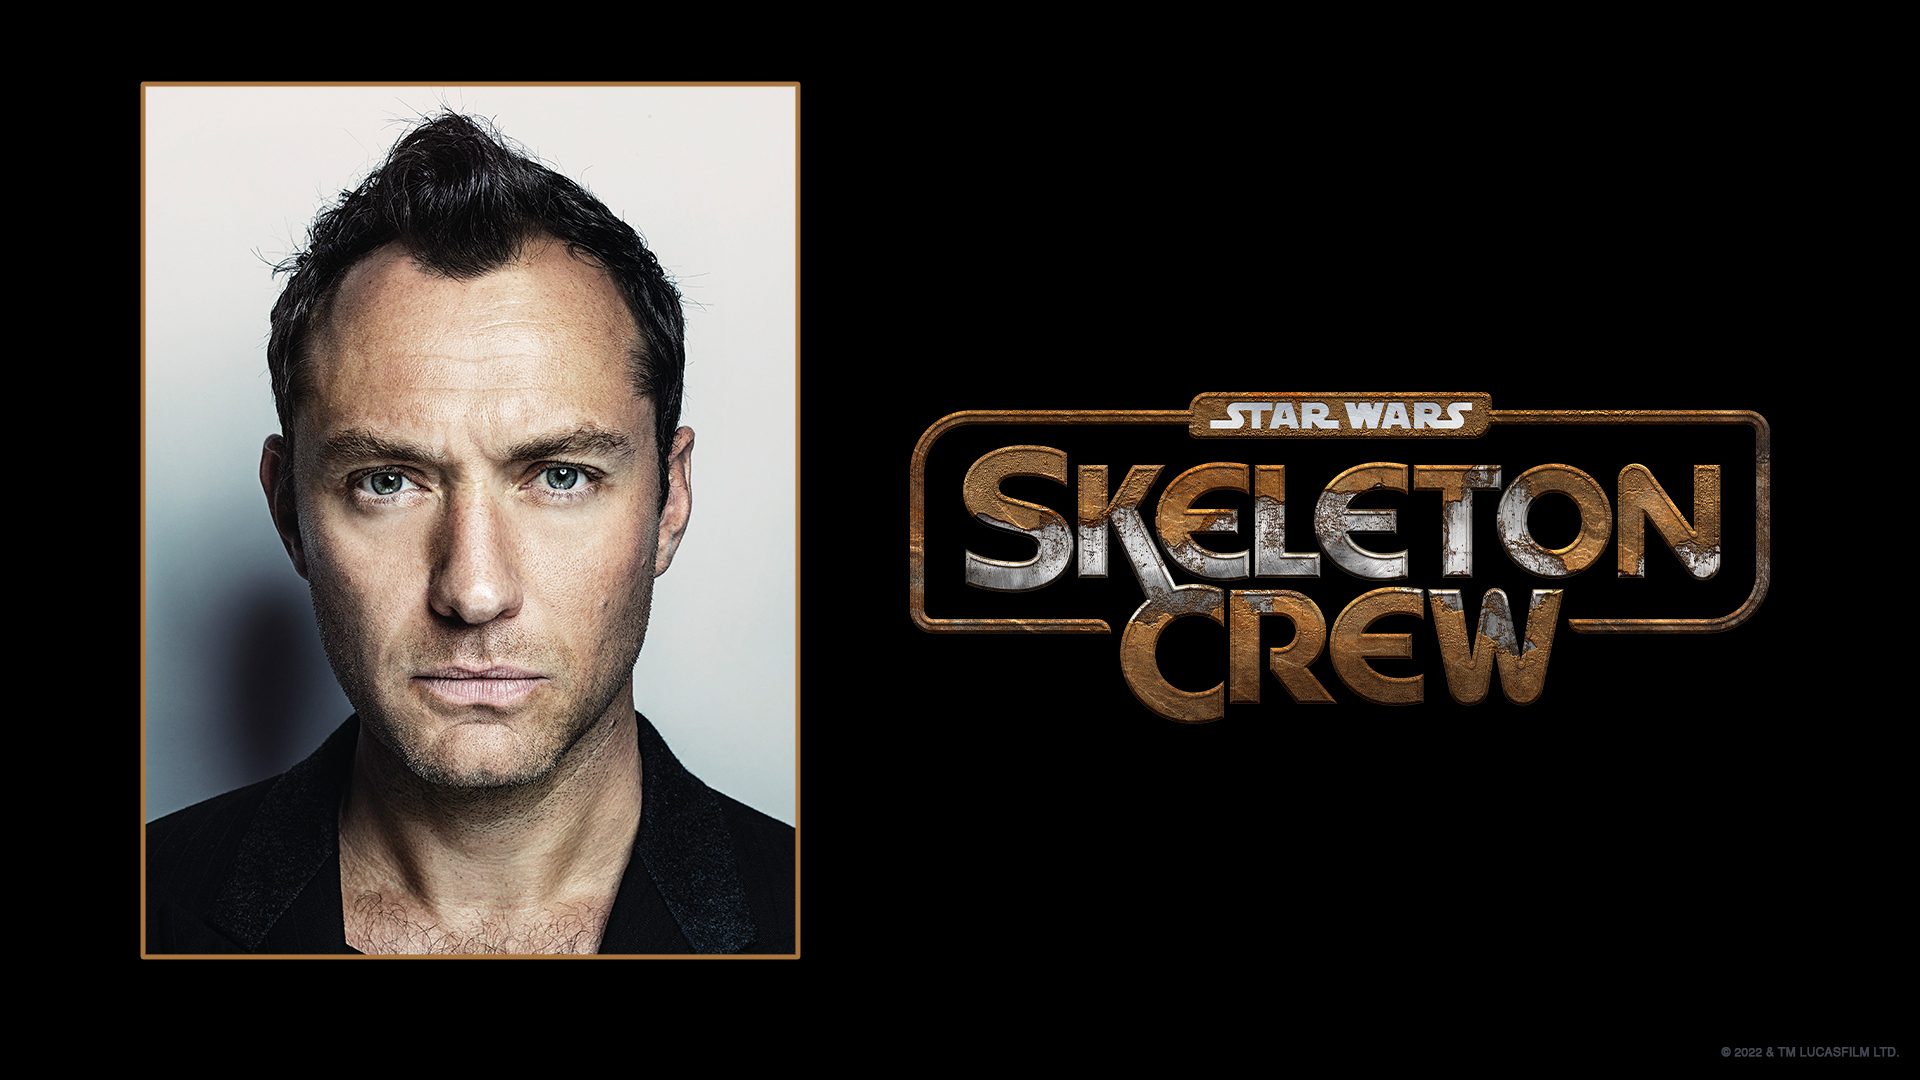 Jude Law to star in new Disney+ series, ‘Star Wars: Skeleton Crew’